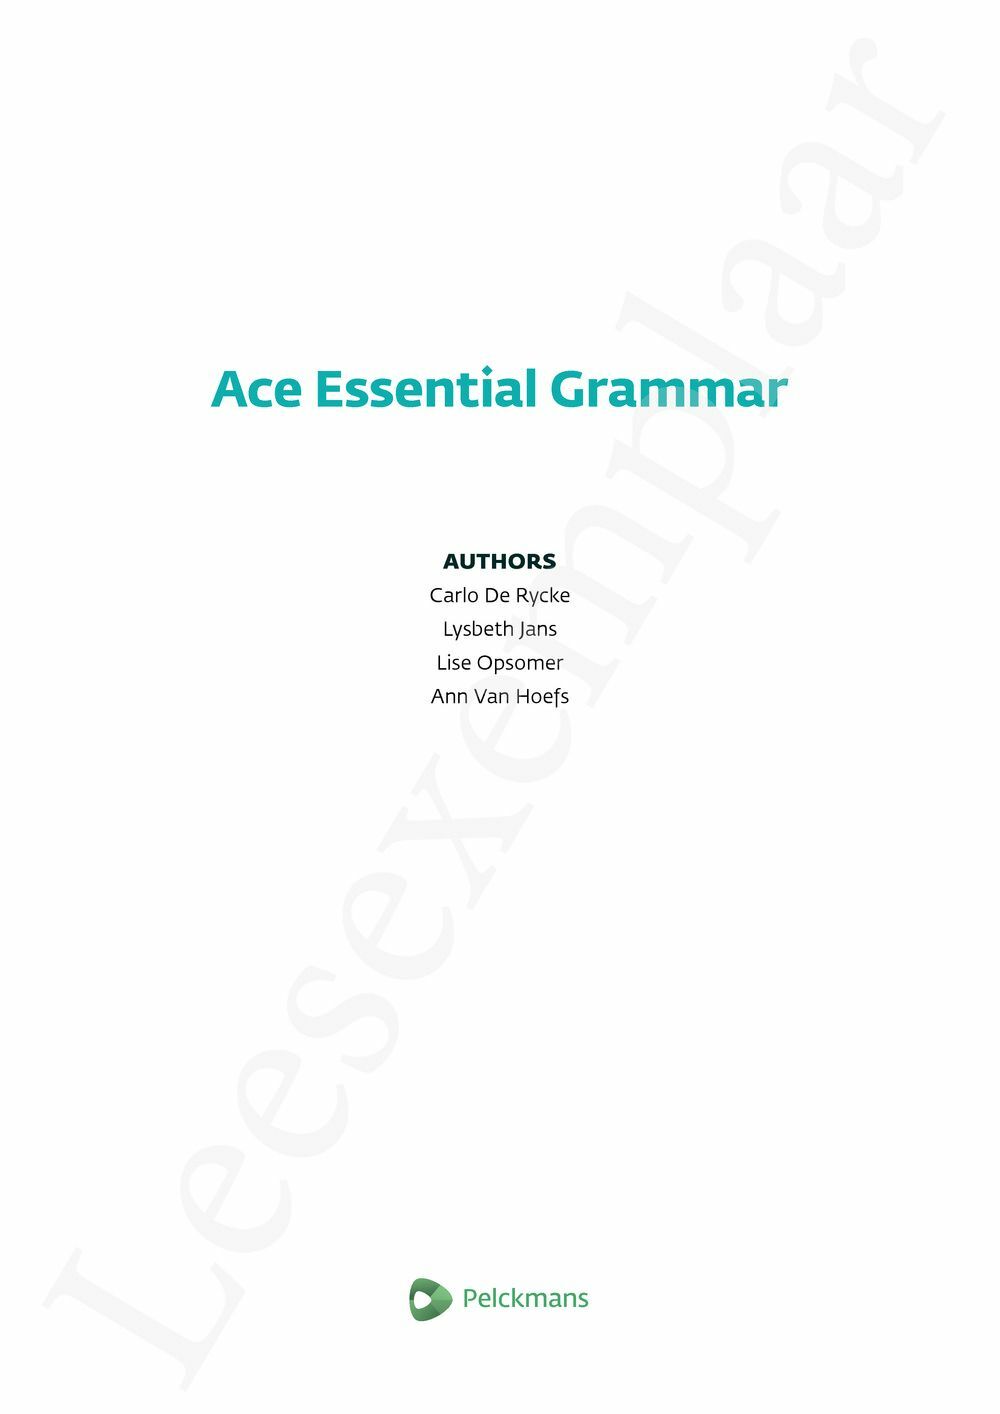 Preview: Ace Essential Grammar